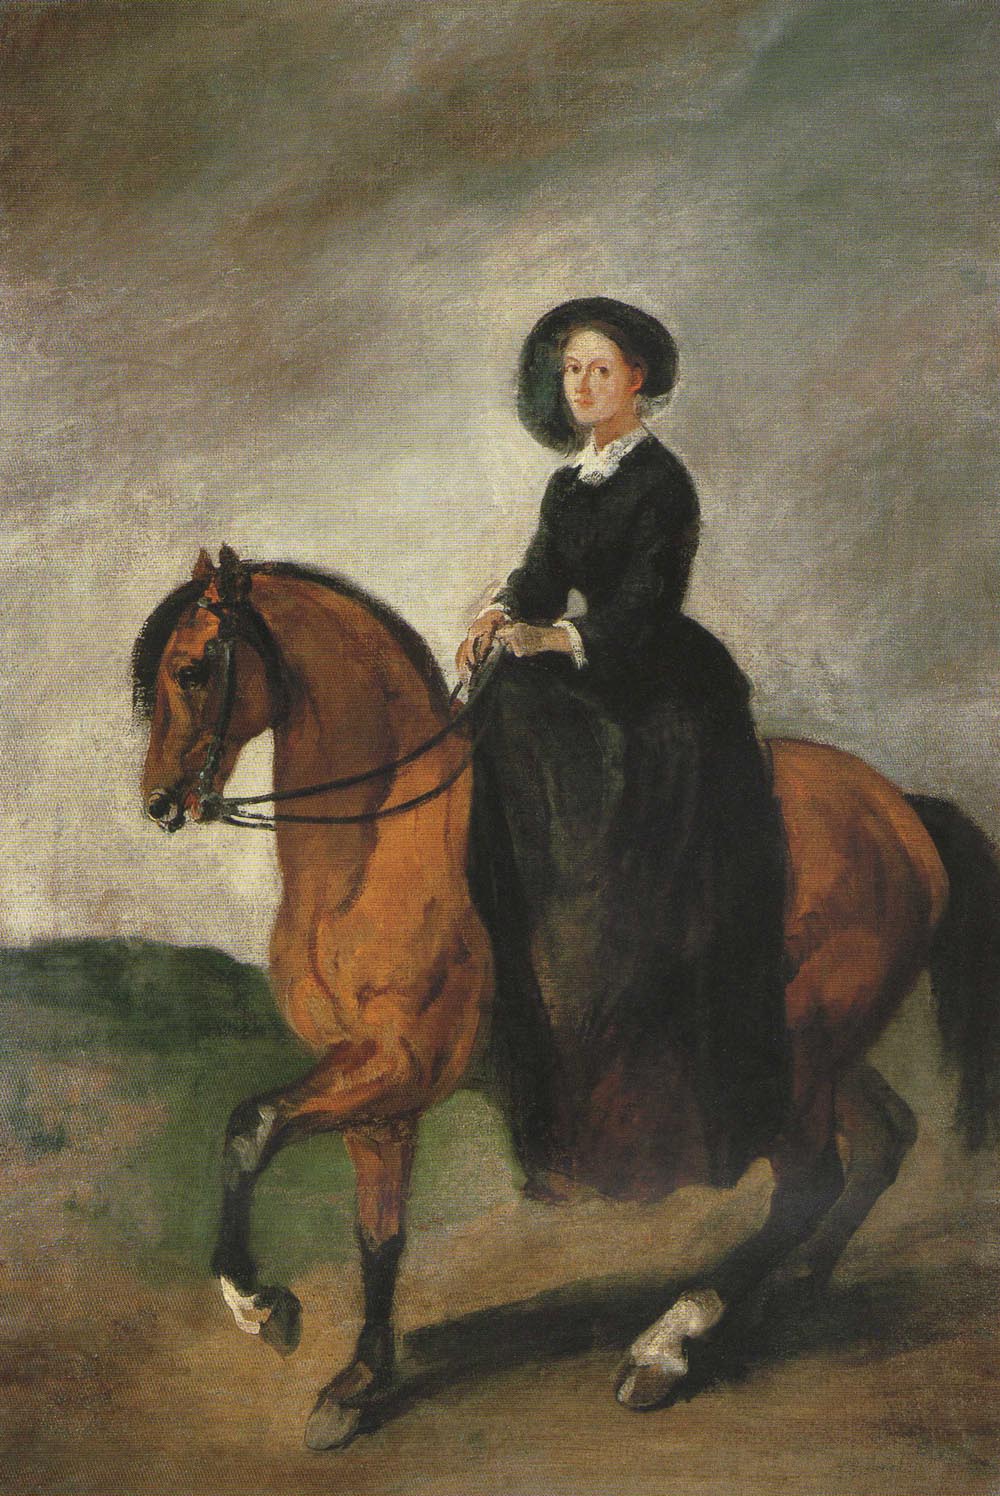 Portret crki artysty Celiny na koniu